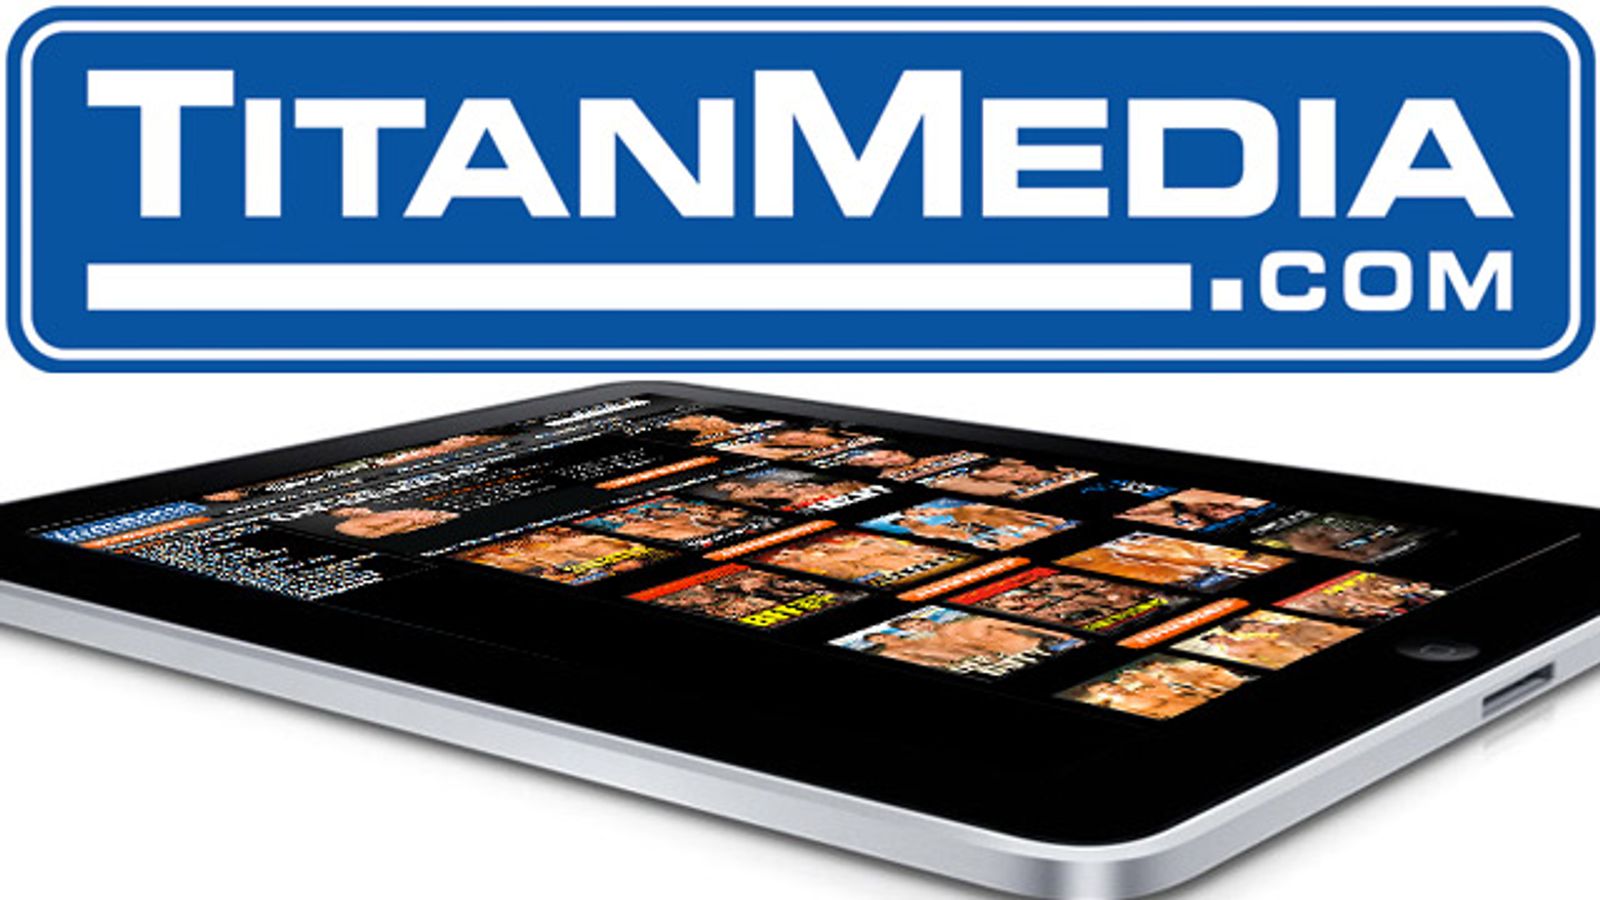 TitanMen.com Launches iPad-Optimized On-Demand Site